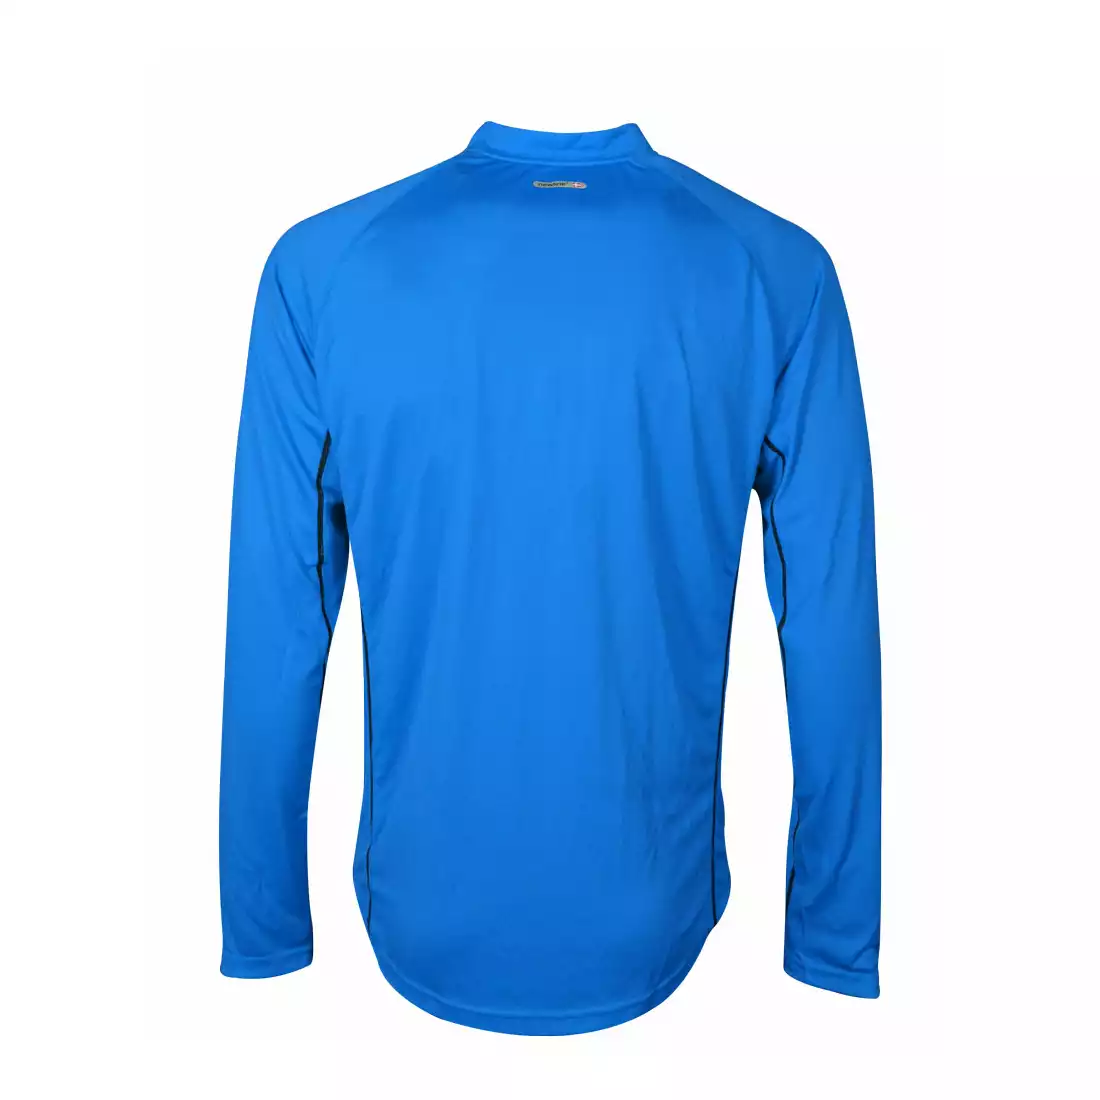 NEWLINE BASE ZIP SHIRT - męska koszulka do biegania D/R 14370-016